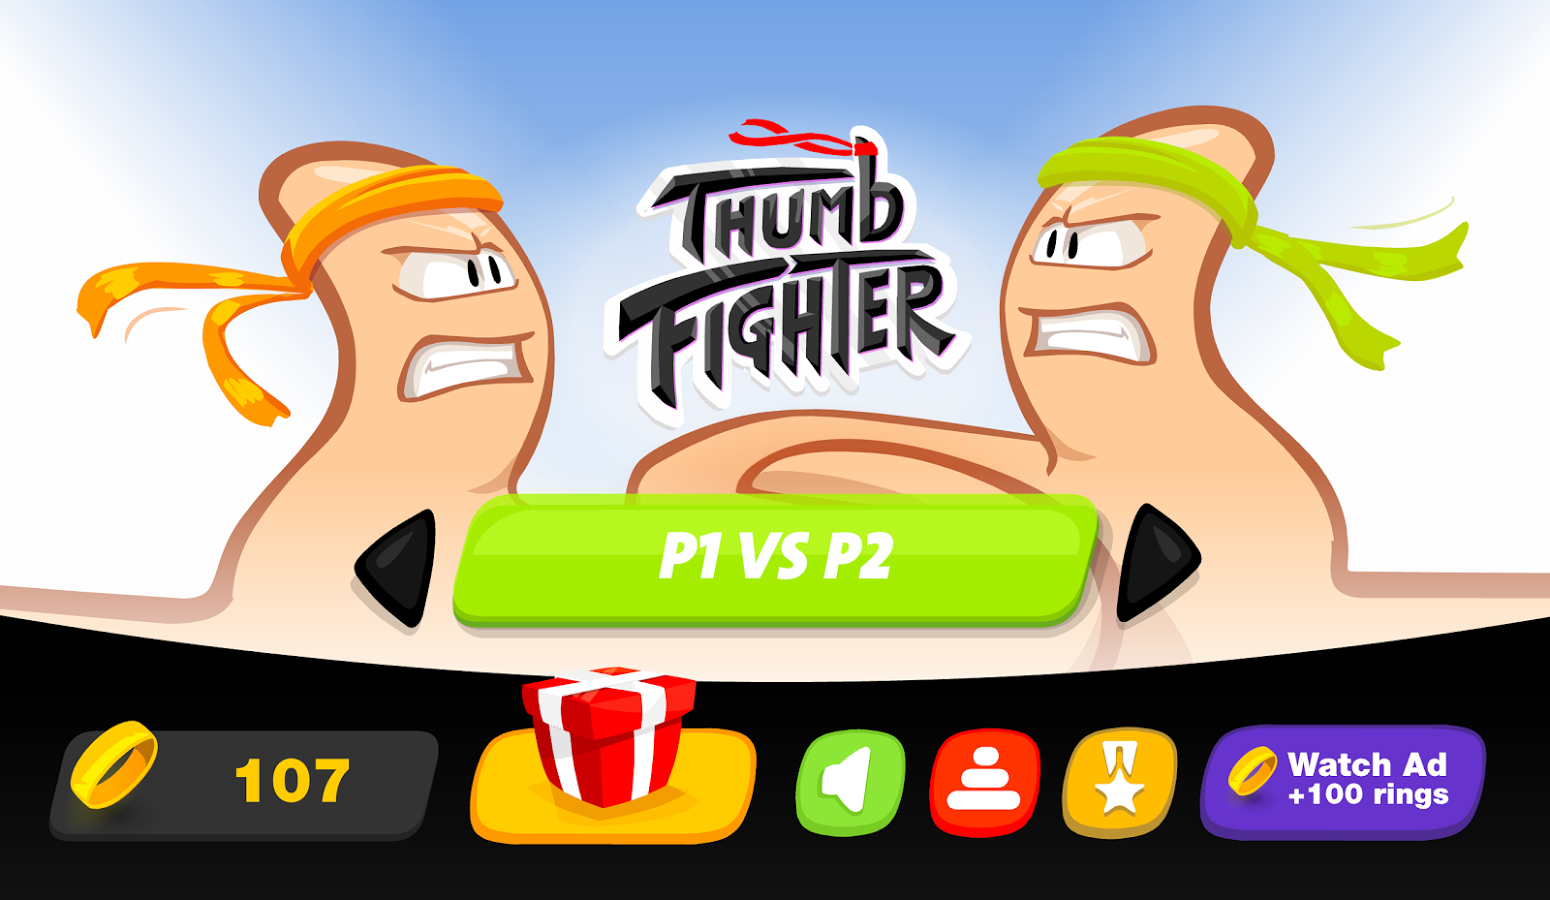 Thumb Fighter (Mod Money)